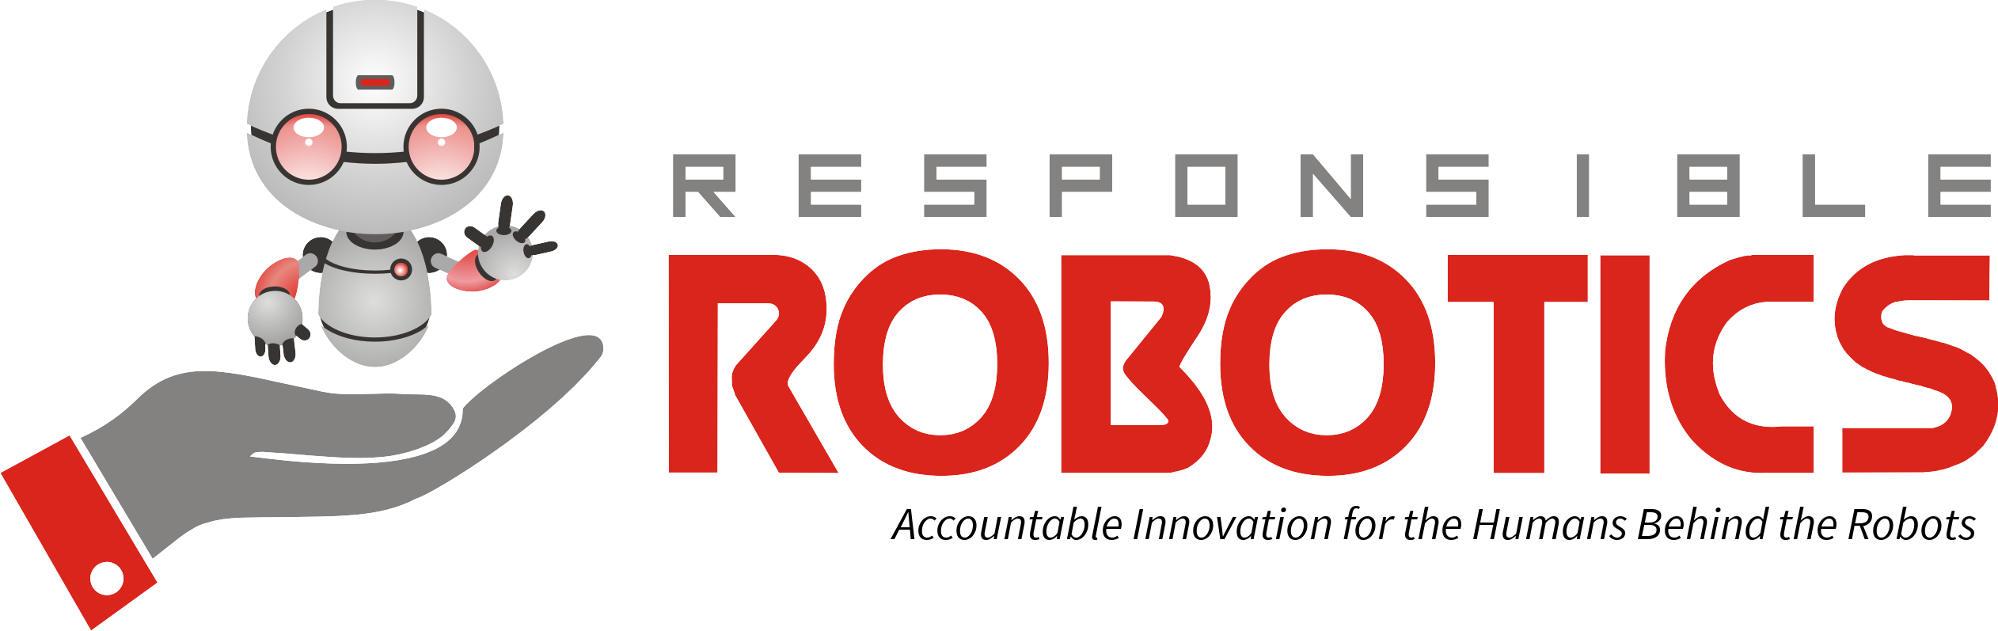 Robotics Logo - Home. Foundation for Responsible Robotics (FRR)